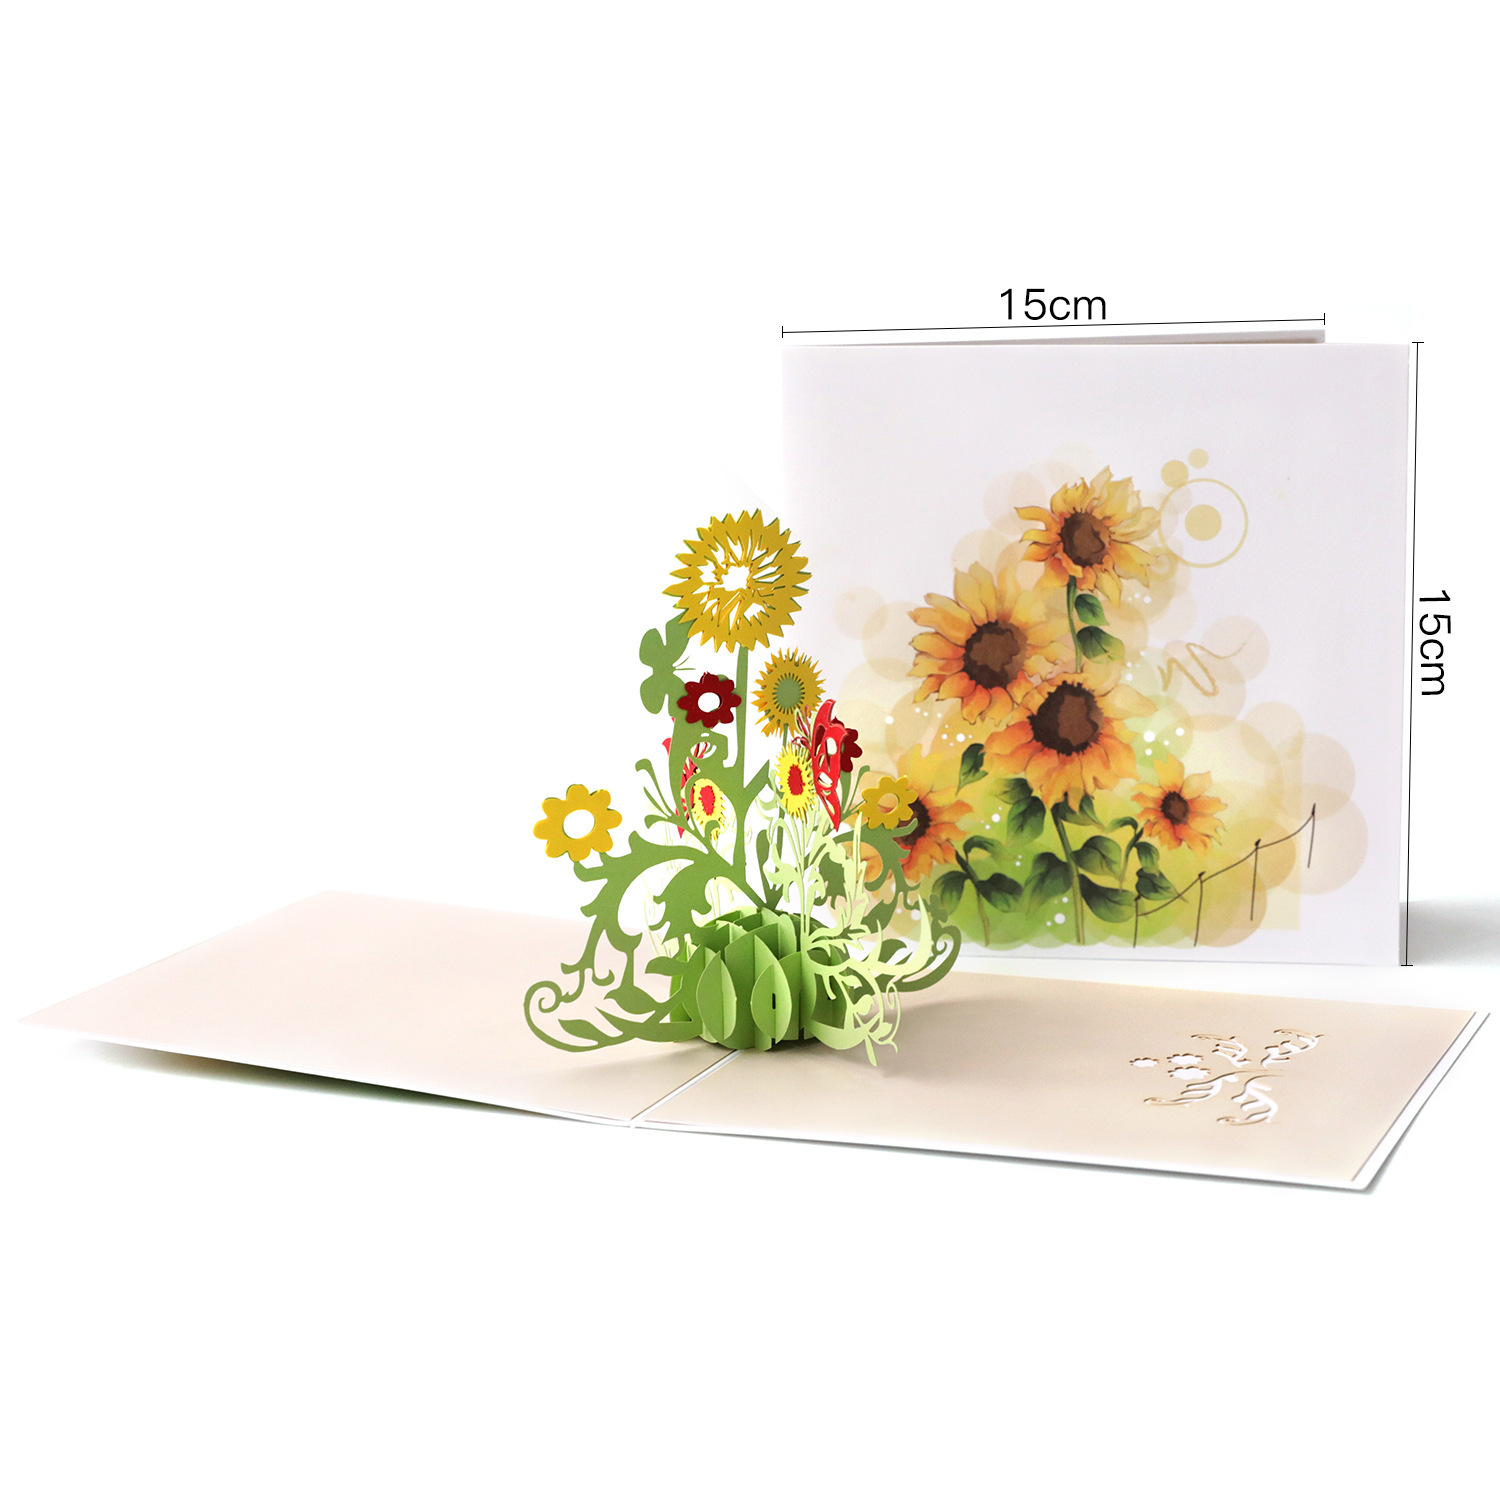 1:Color printing sun flower